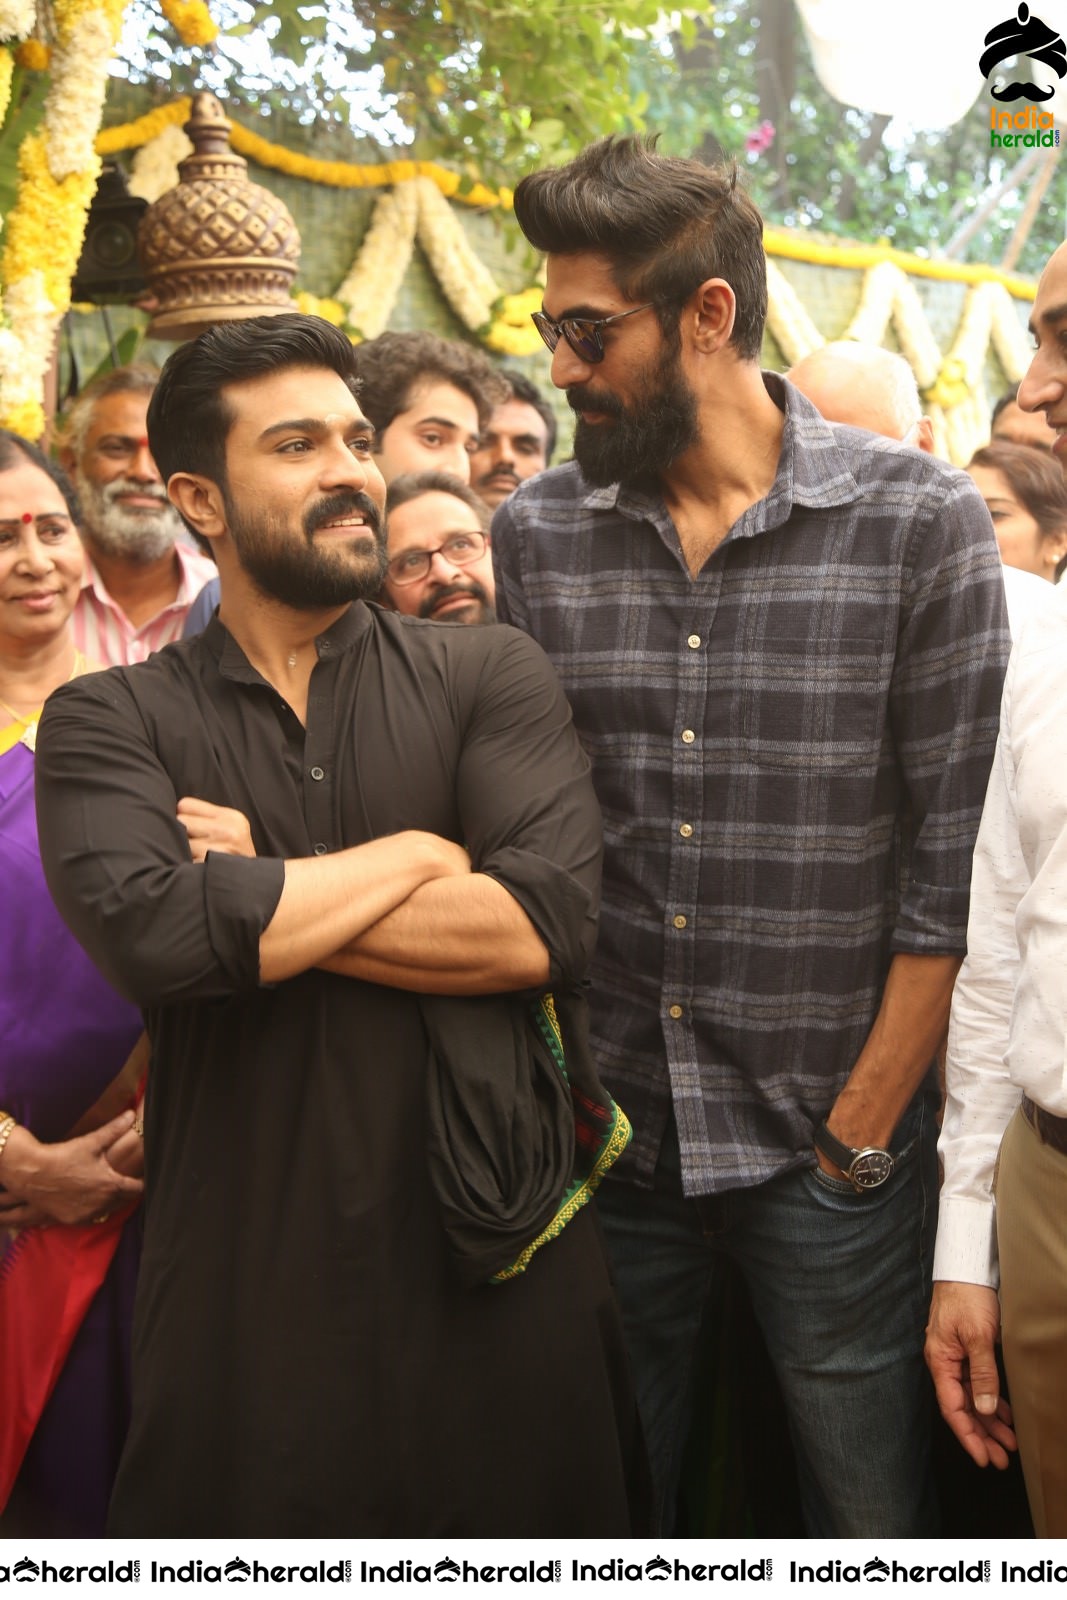 Actor Ram Charan and Rana Daggubati Spotted Together with Beard Looks Set 1